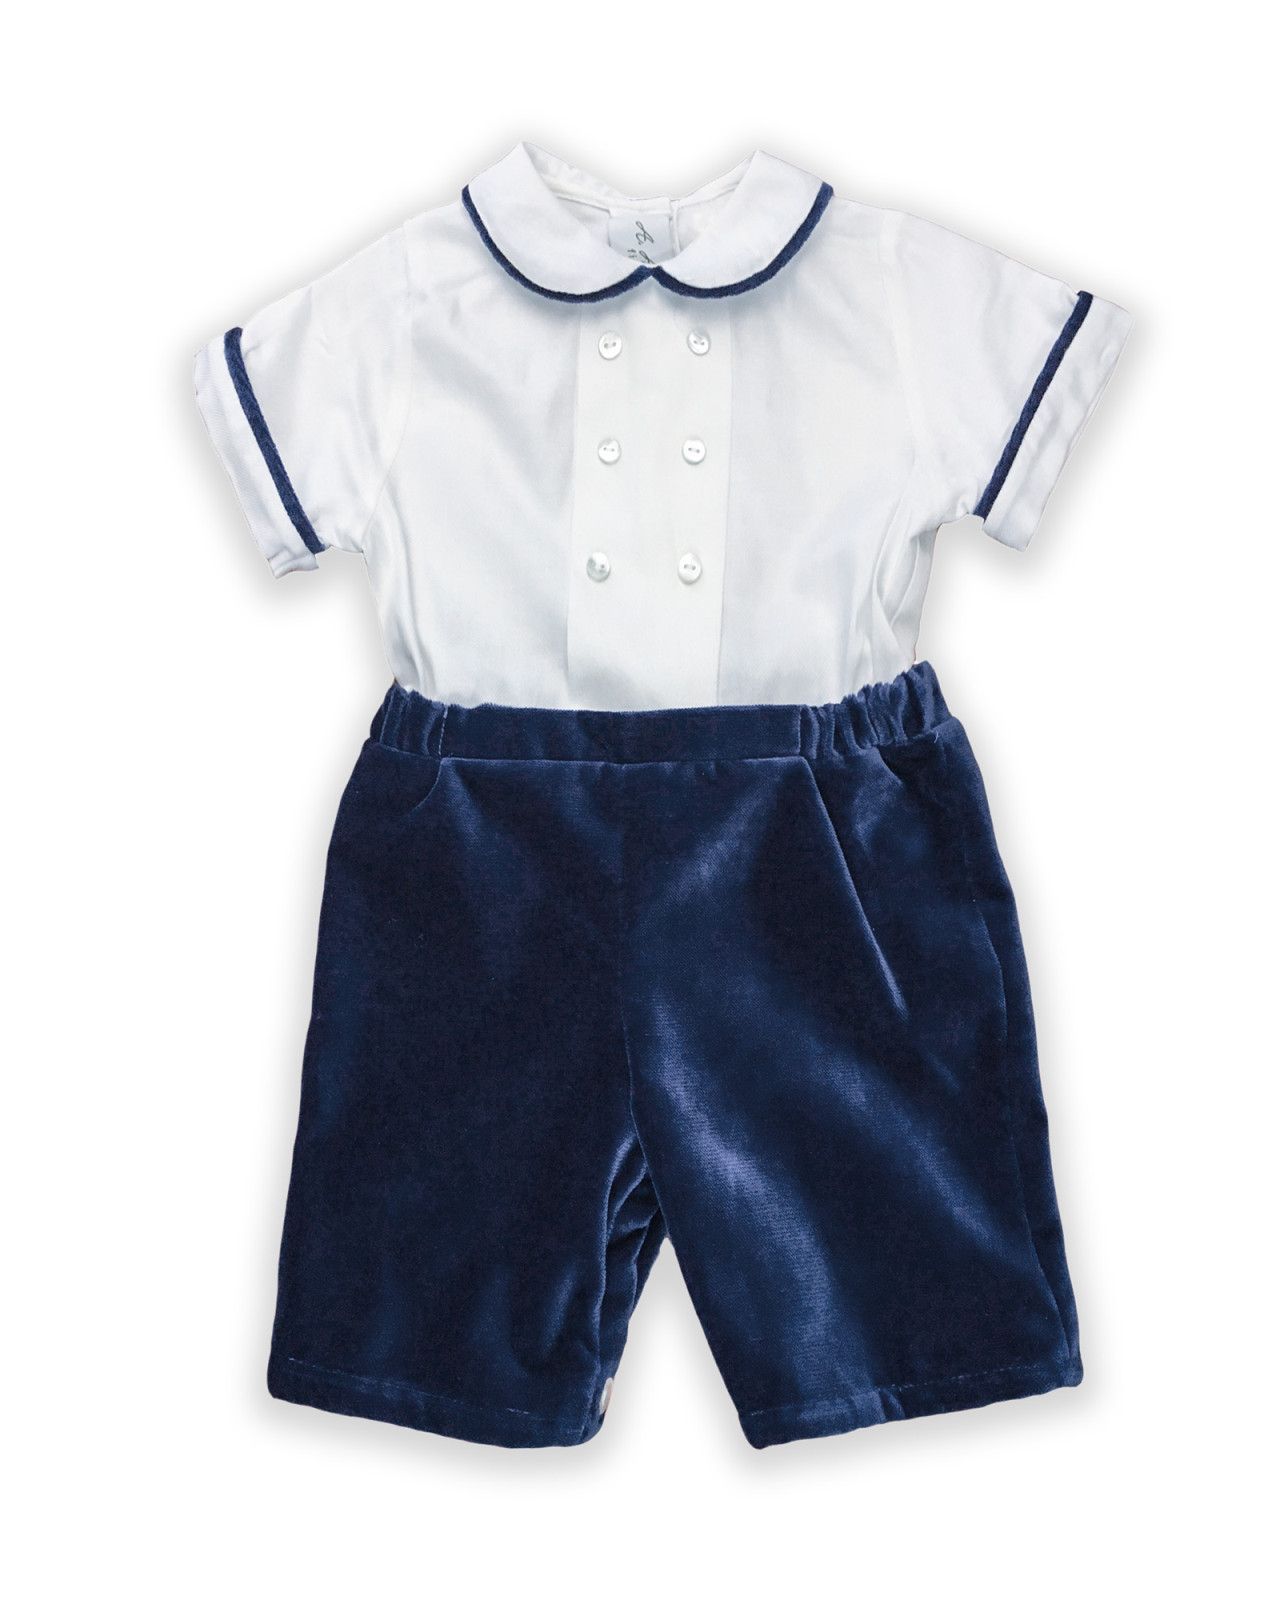 Boy outfit cotton velvet Navy blue